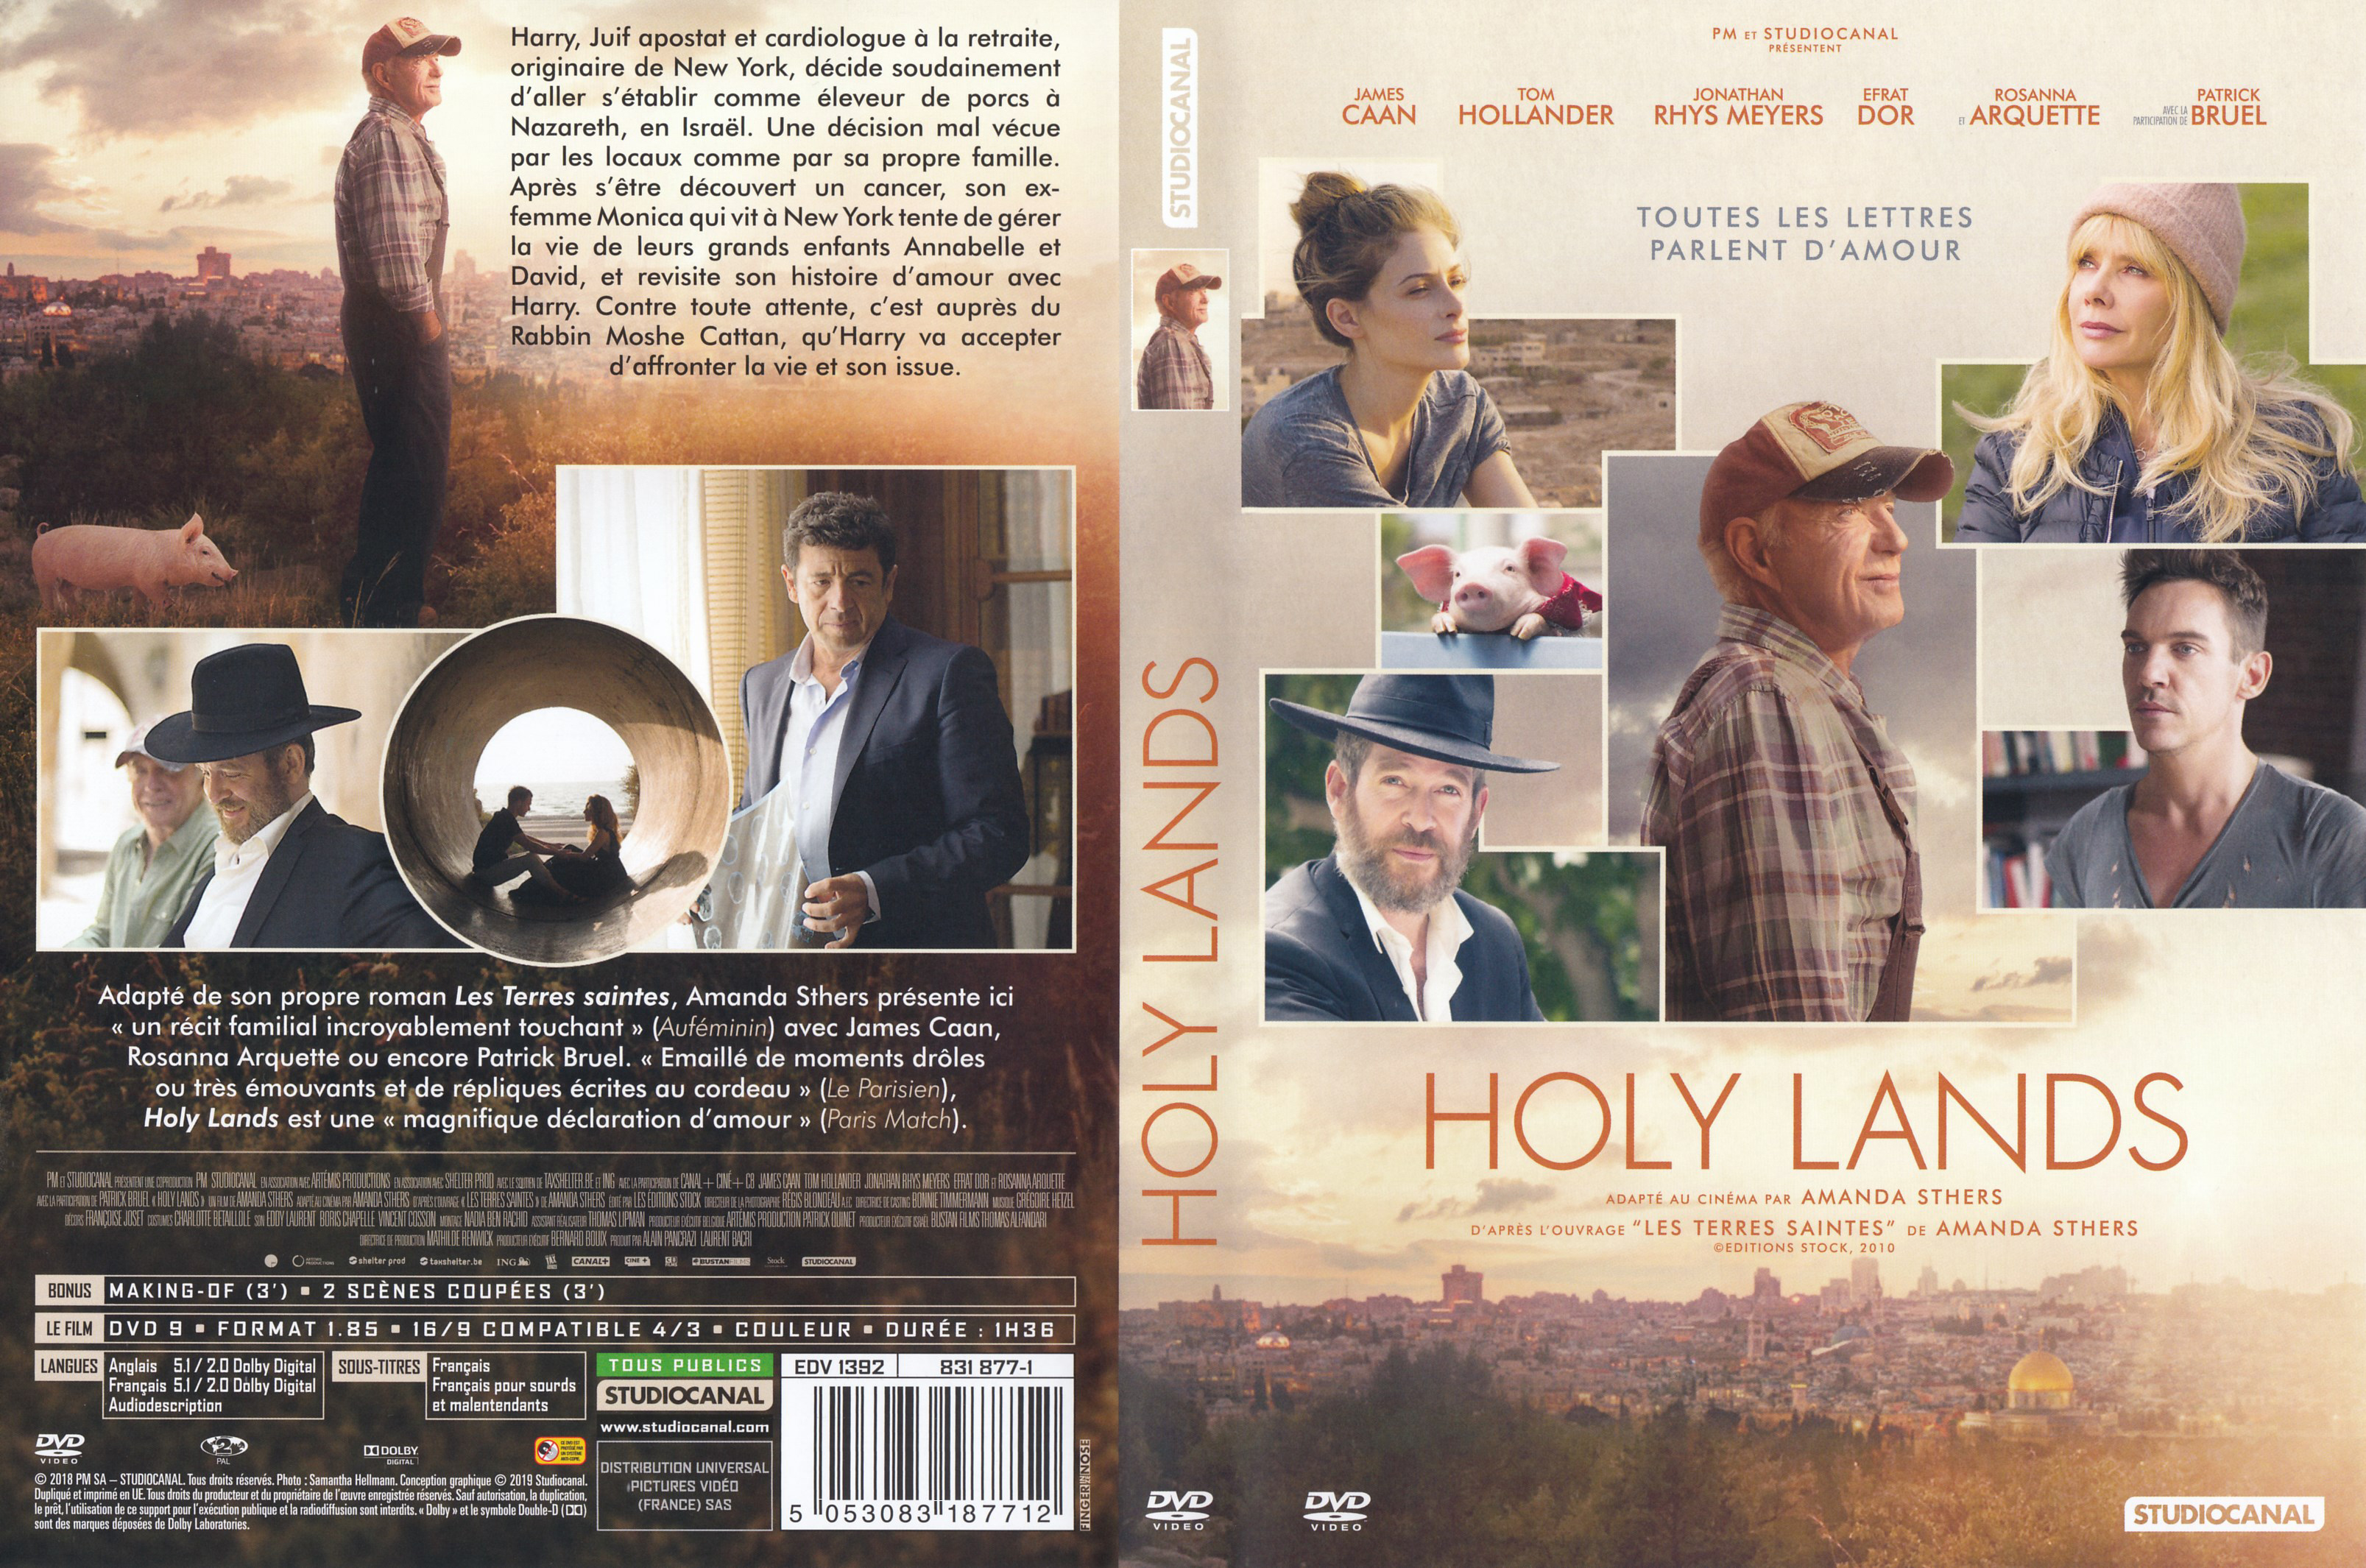 Jaquette DVD Holy lands